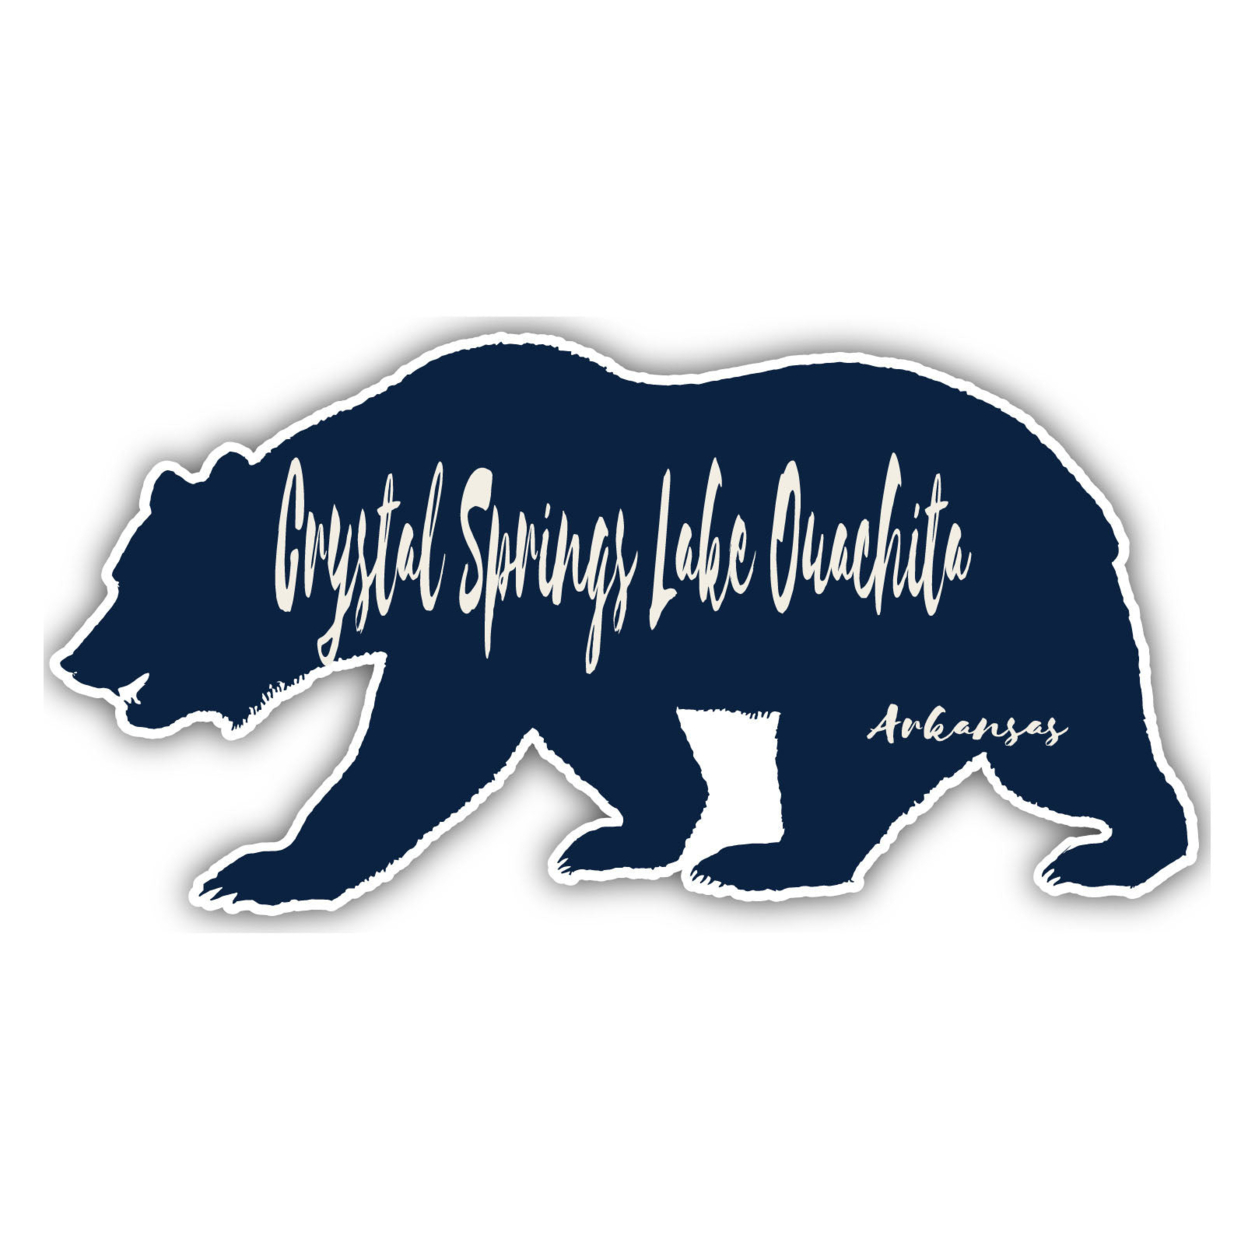 Crystal Springs Lake Ouachita Arkansas Souvenir Decorative Stickers (Choose Theme And Size) - Single Unit, 12-Inch, Tent